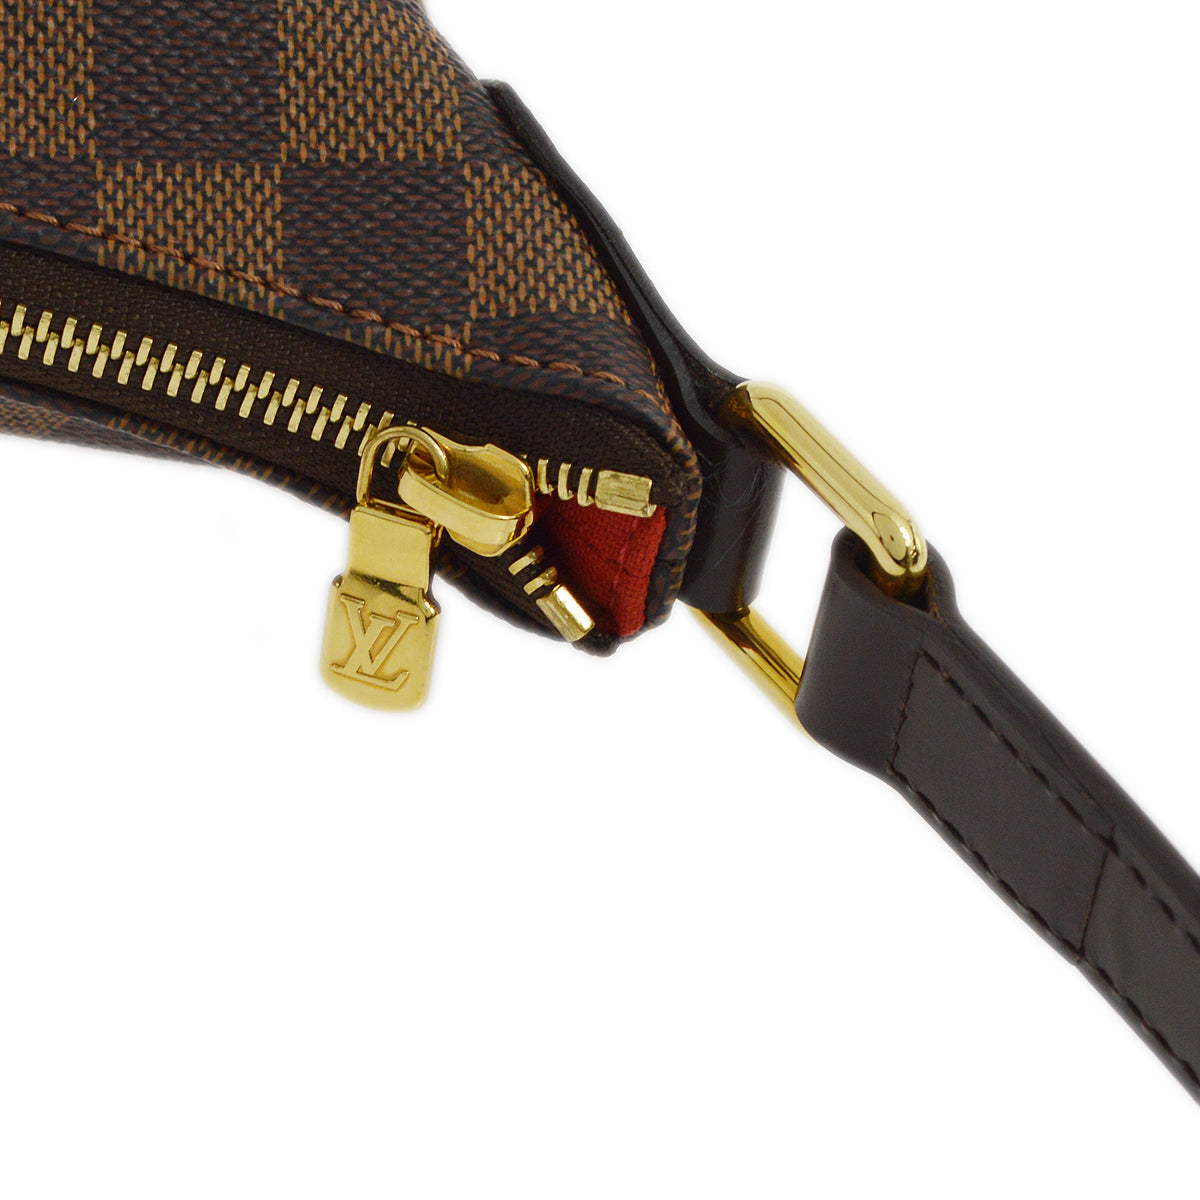 Louis Vuitton 2016 Damier Bloomsbury PM Shoulder Bag N42251